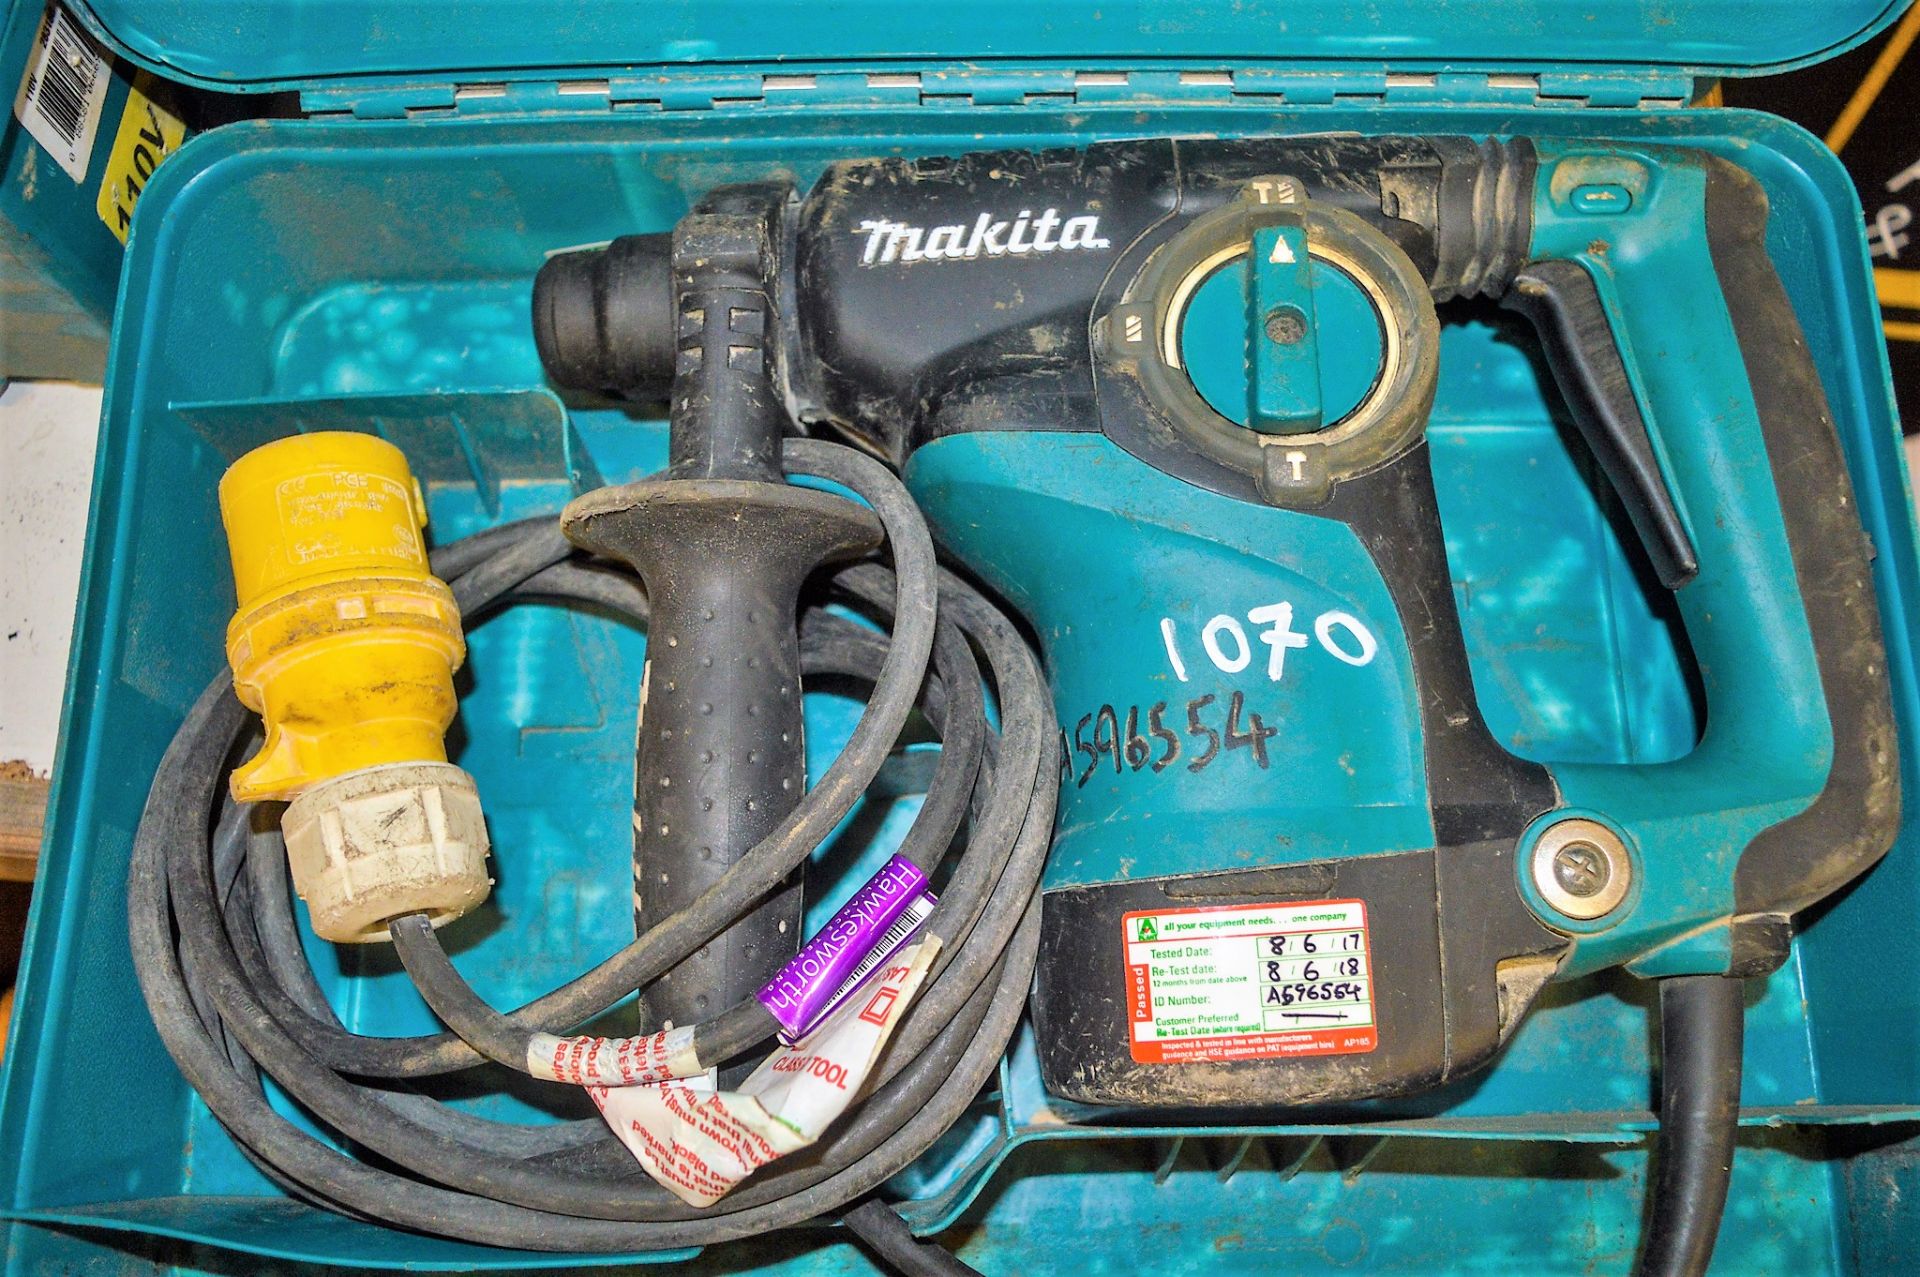 Makita 110v SDS rotary hammer drill c/w carry case A596554